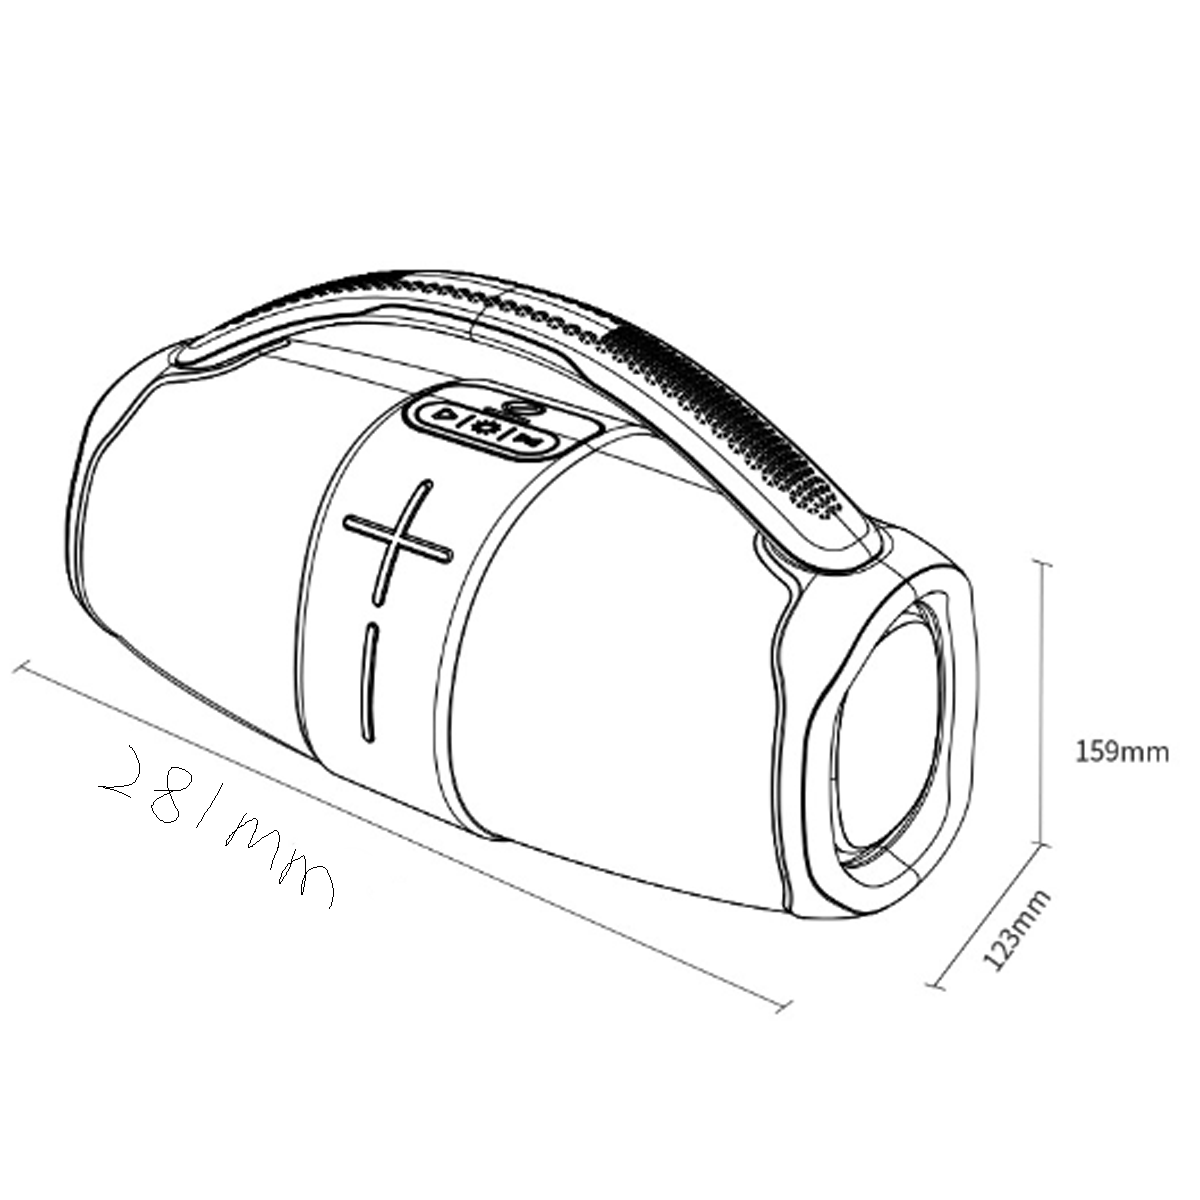 ENBAOXIN Subwoofer-Bluetooth-Lautsprecher, 7 Doppelkonnektivität Lichteffekt, Wasserfest Rhythmischer TWS Schwarz, Farben, Bluetooth-Lautsprecher